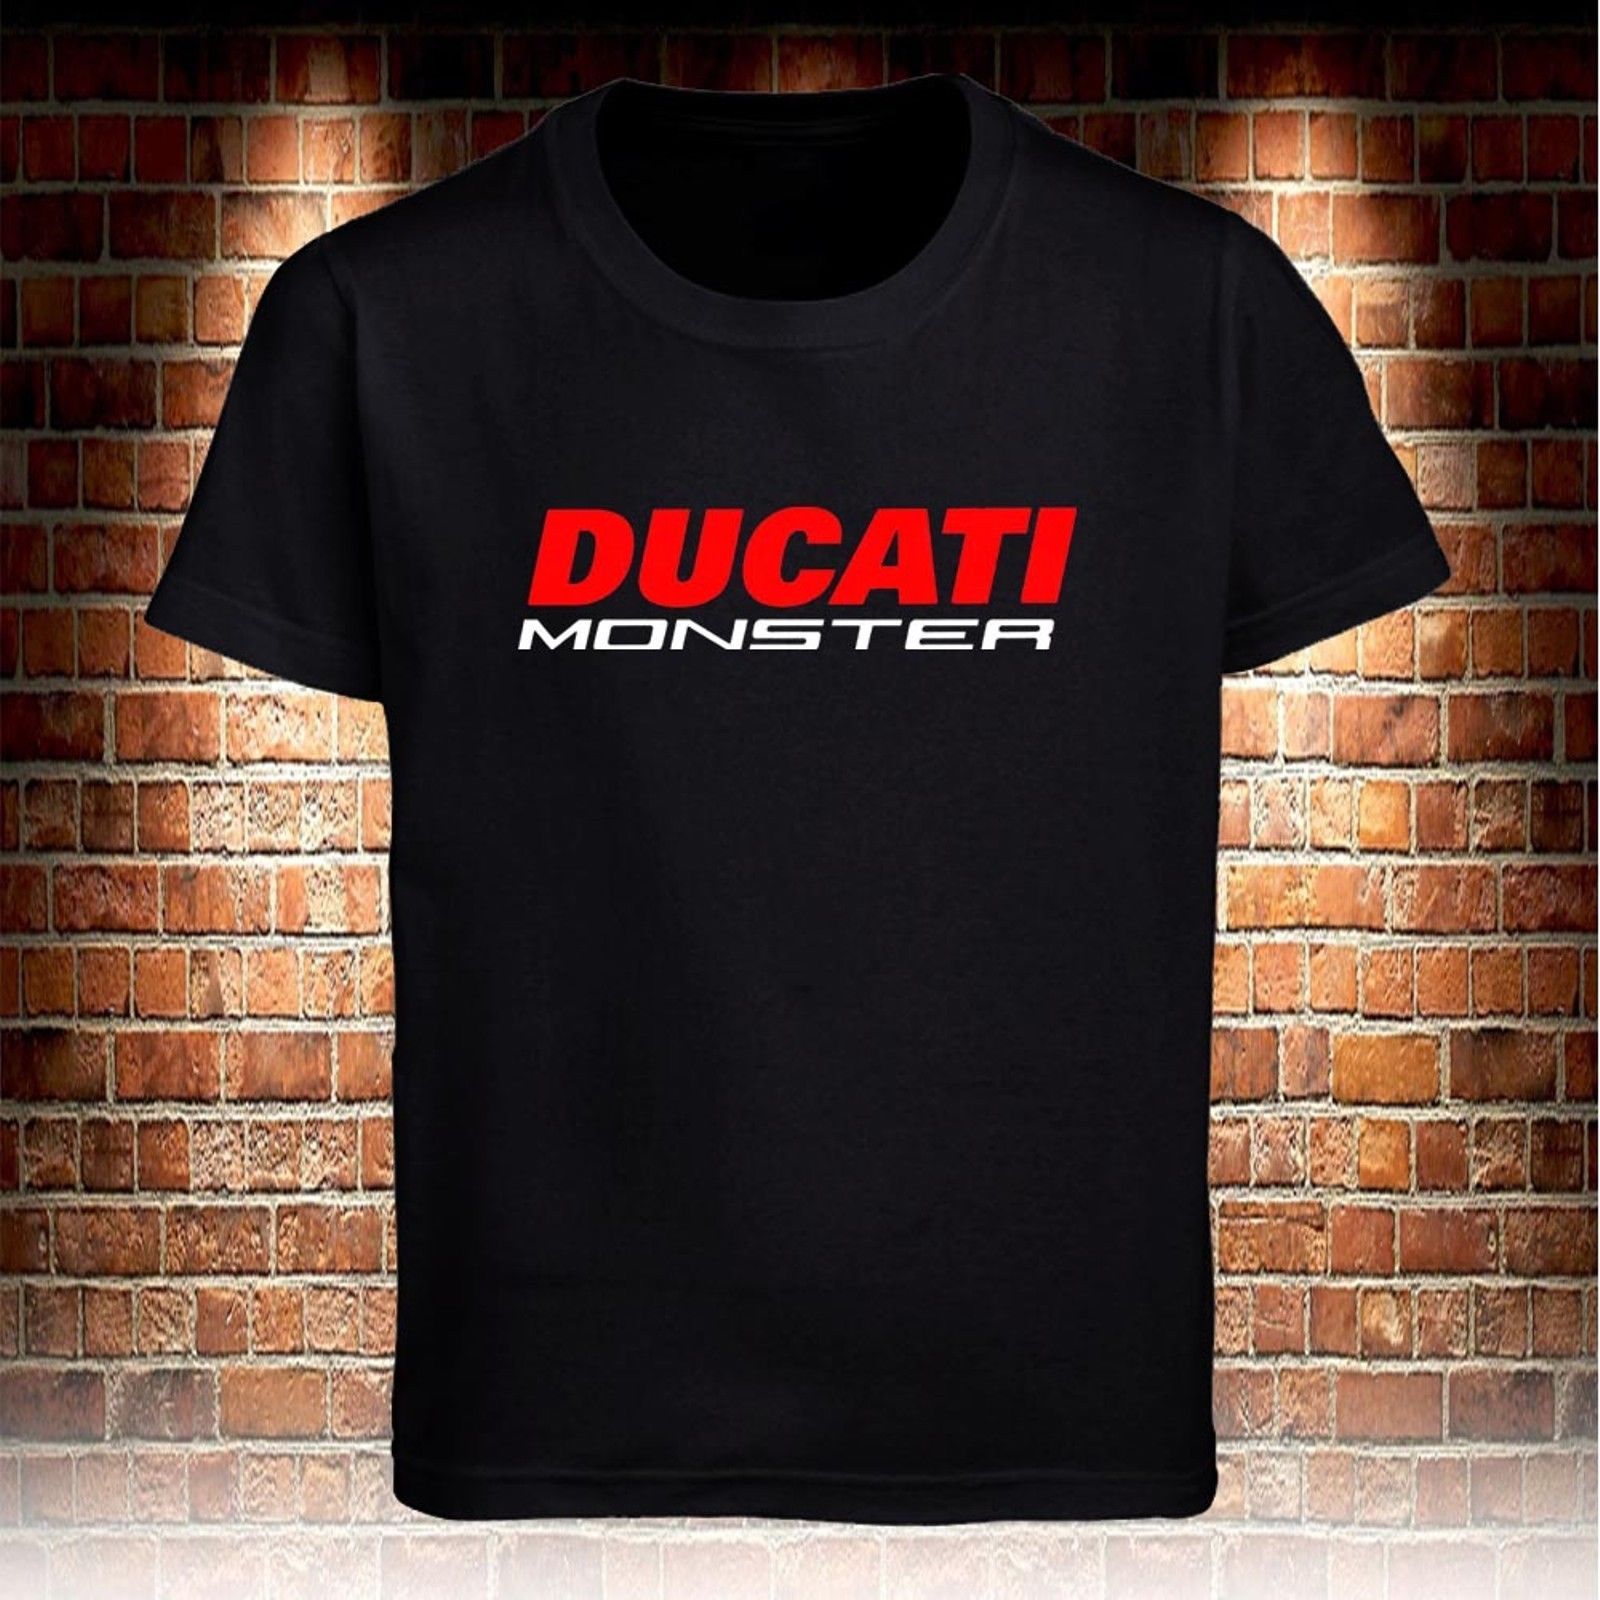 Termignoni Ducati Color Black Size S to 3XL Men's Tshirt